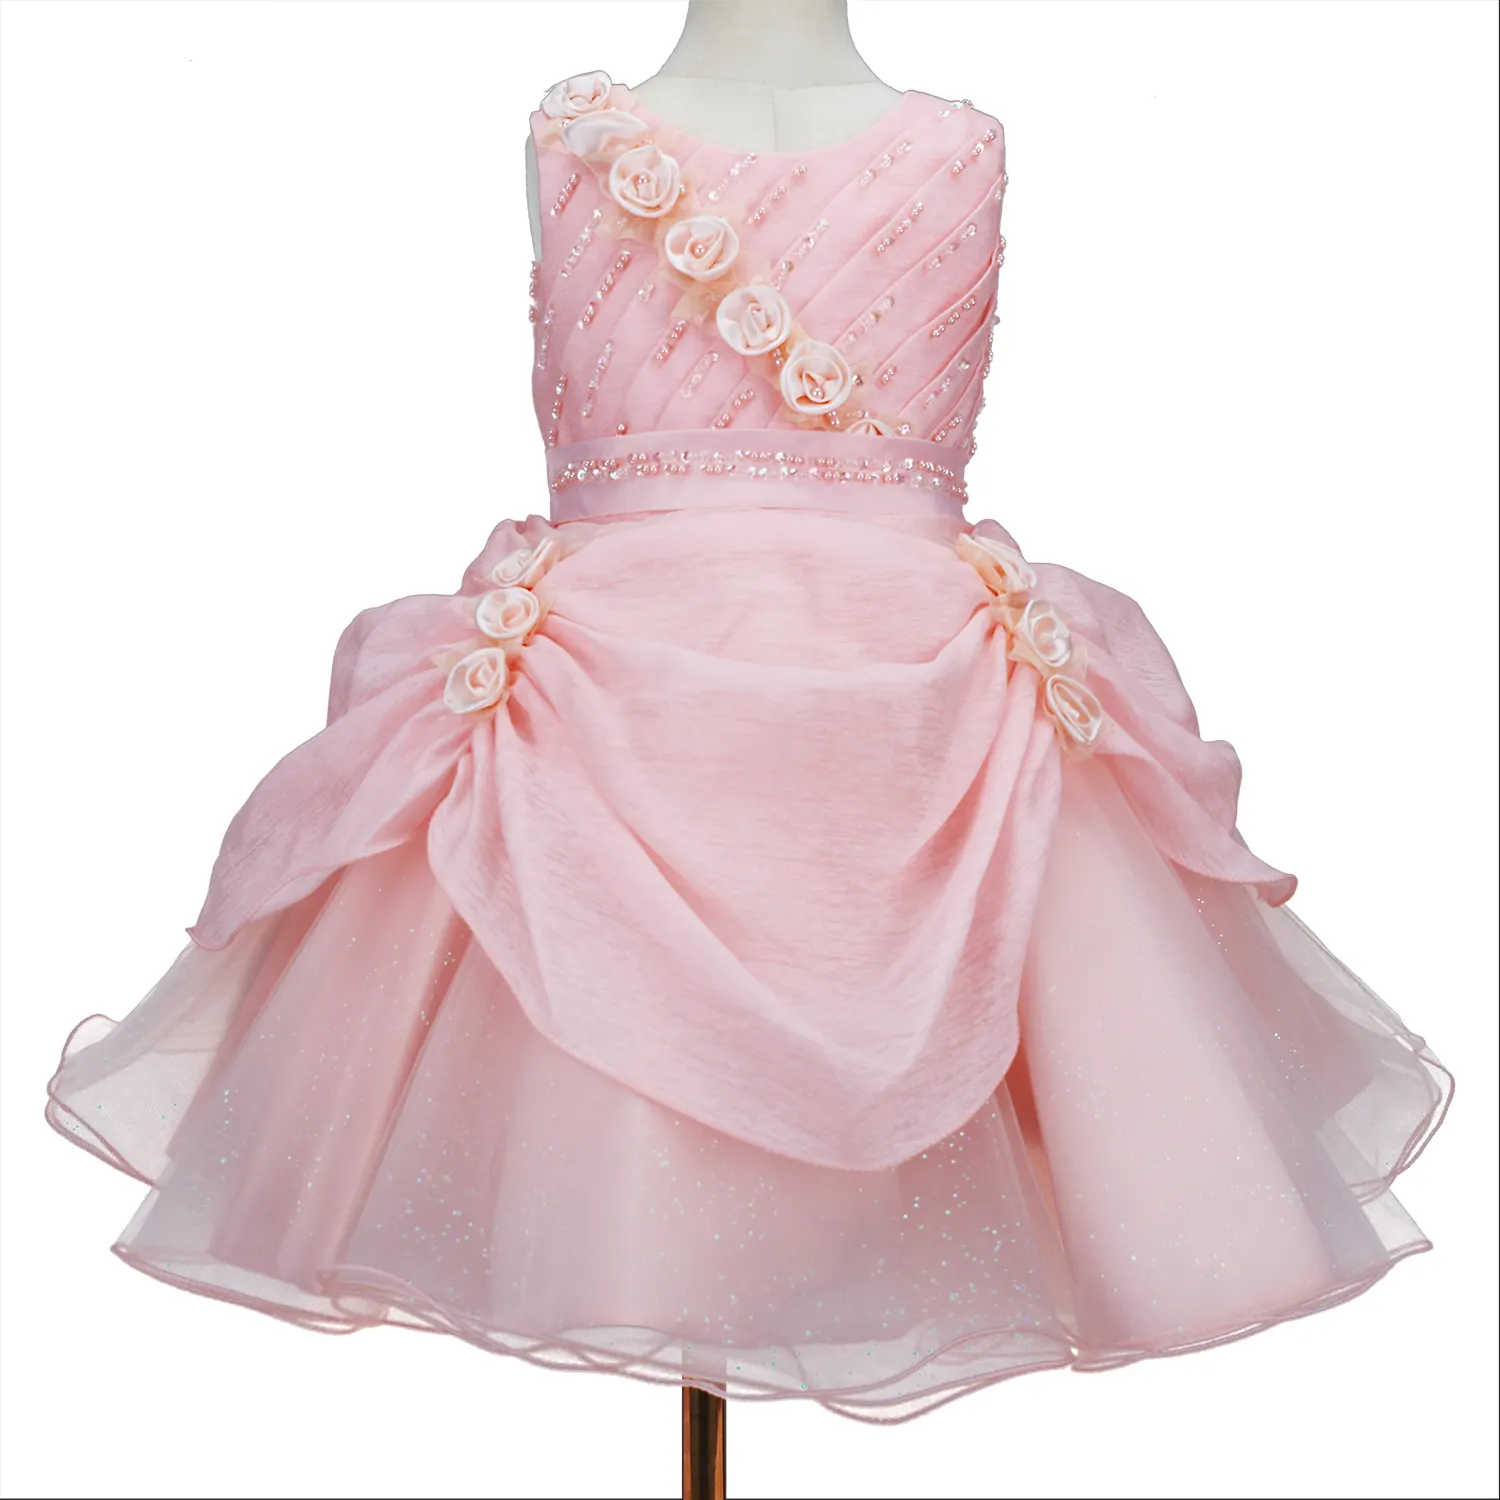 Wholesale sleeveless princess dresses Bow lace princess cake clothes for kids children flower girl dresses